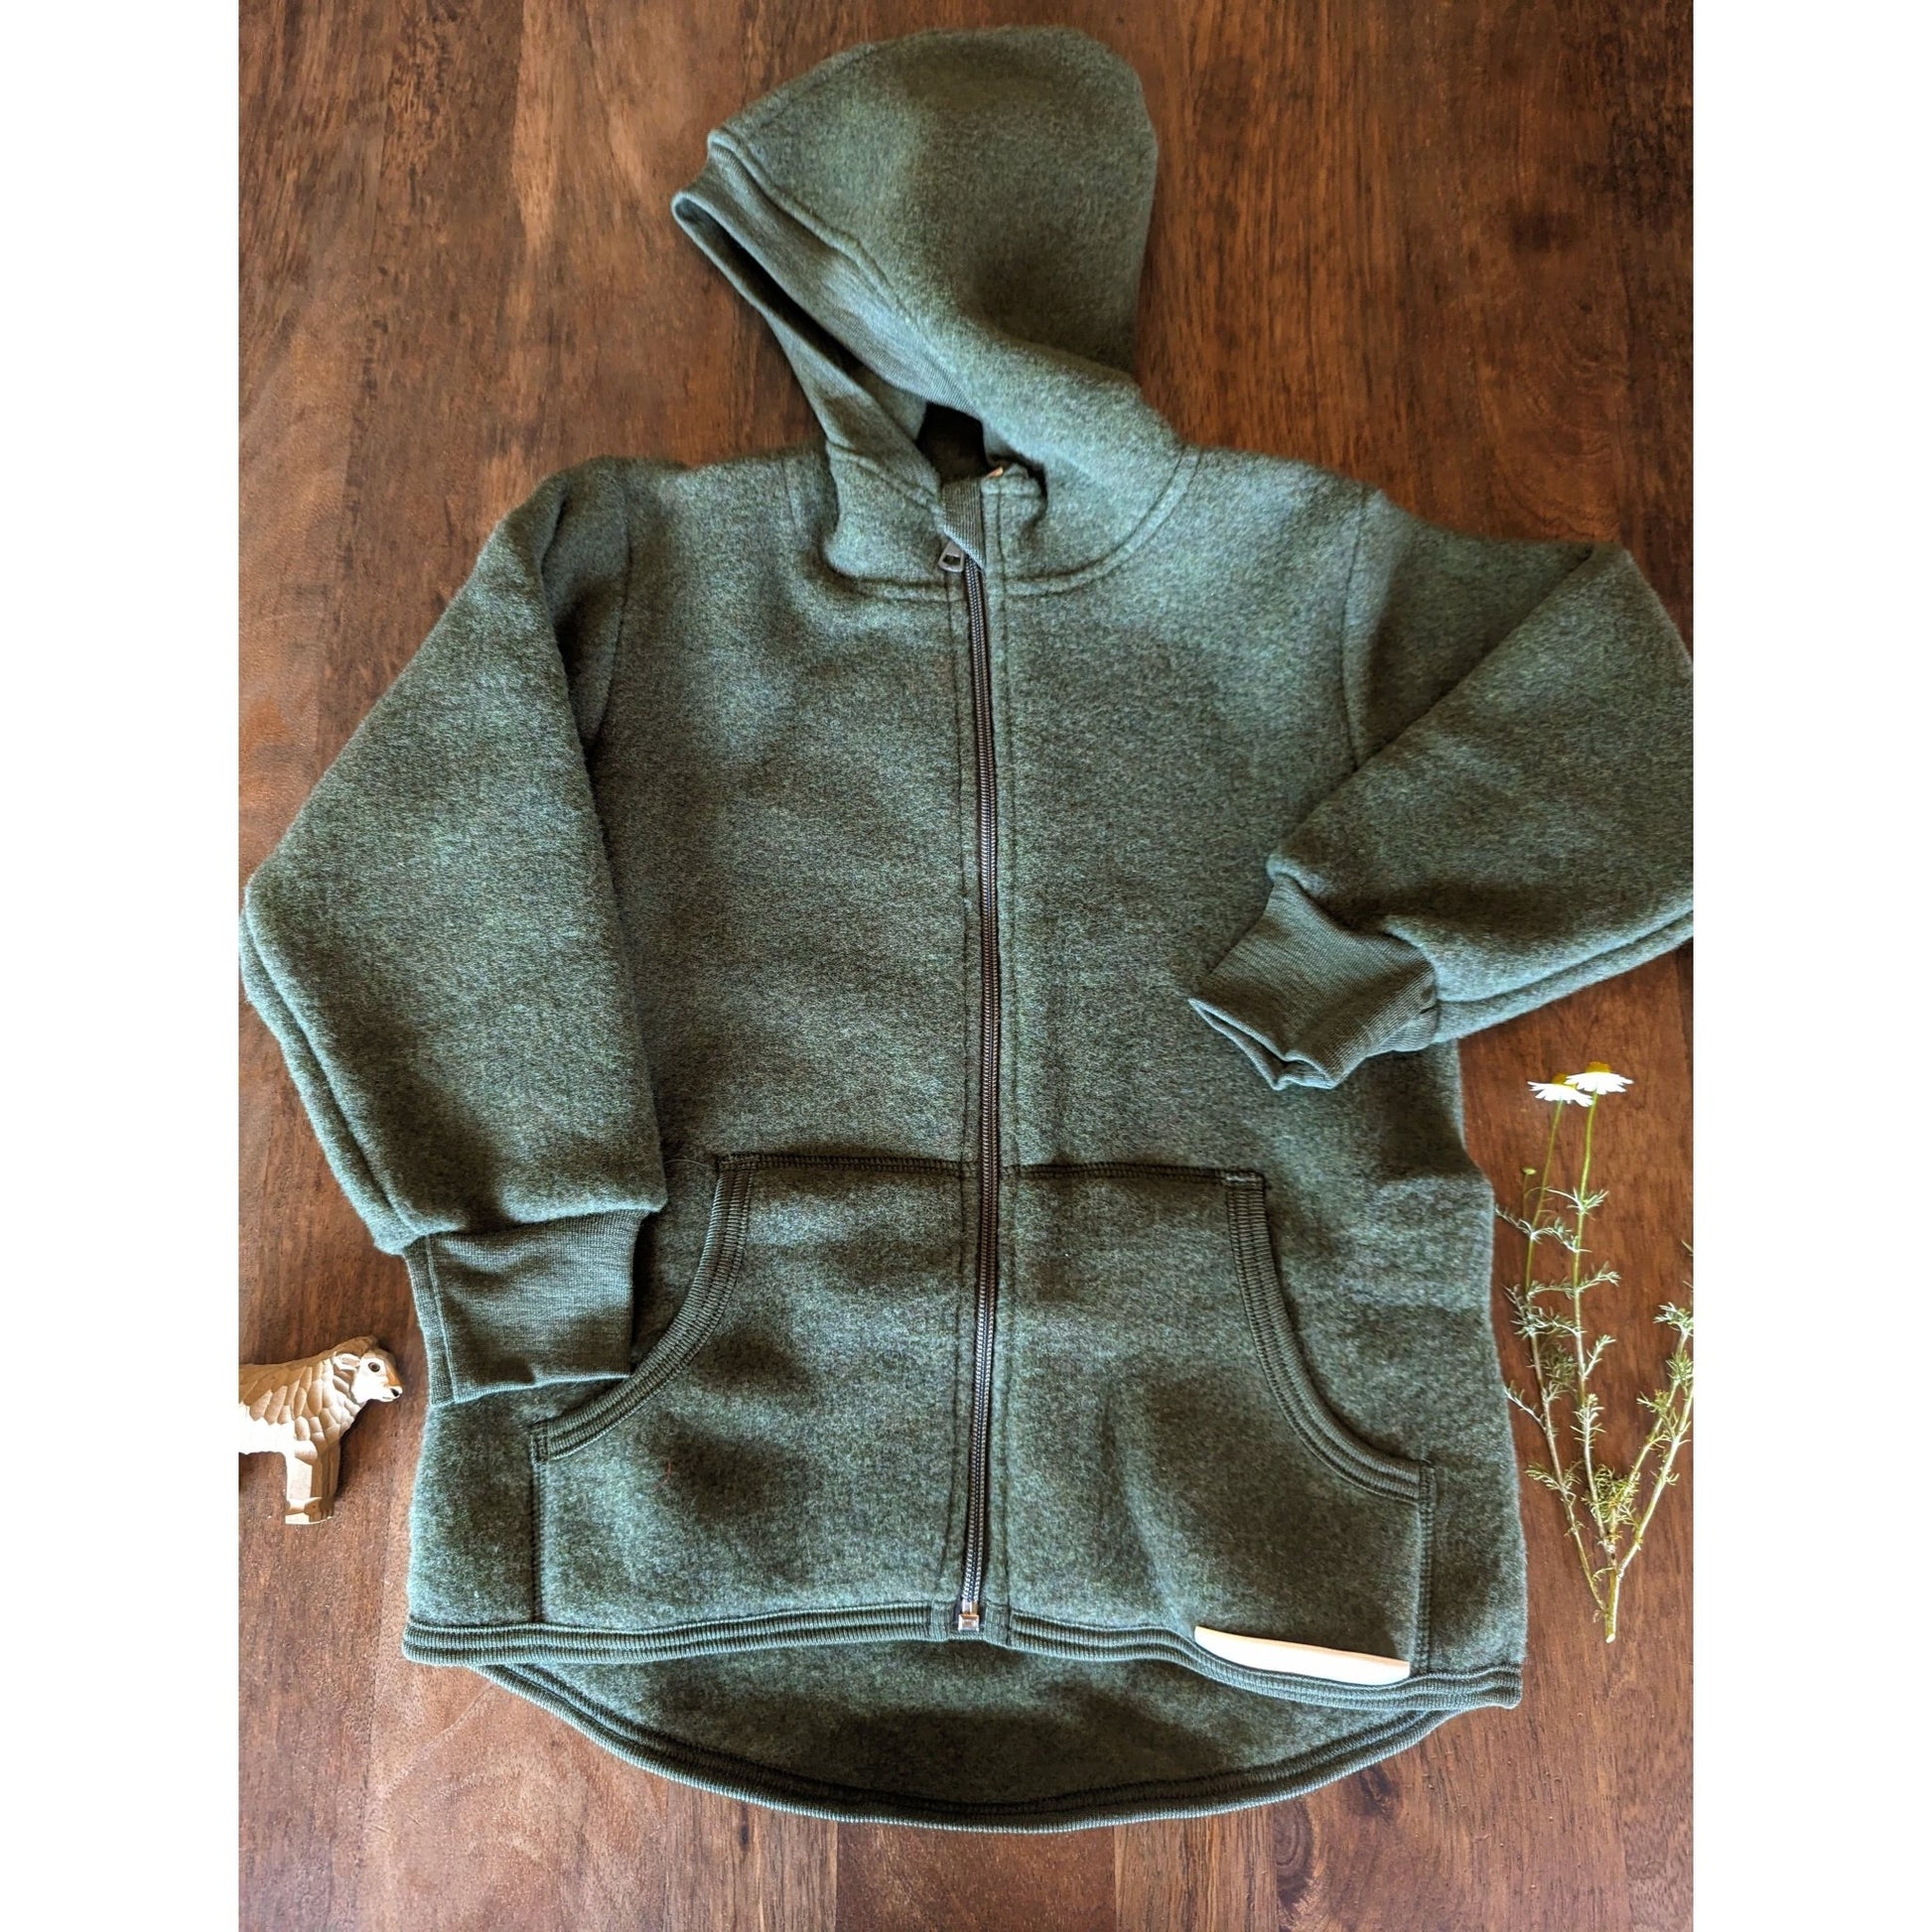 Engel - Organic Wool Fleece Jacket for Kids (5-10 years - 2 colors)